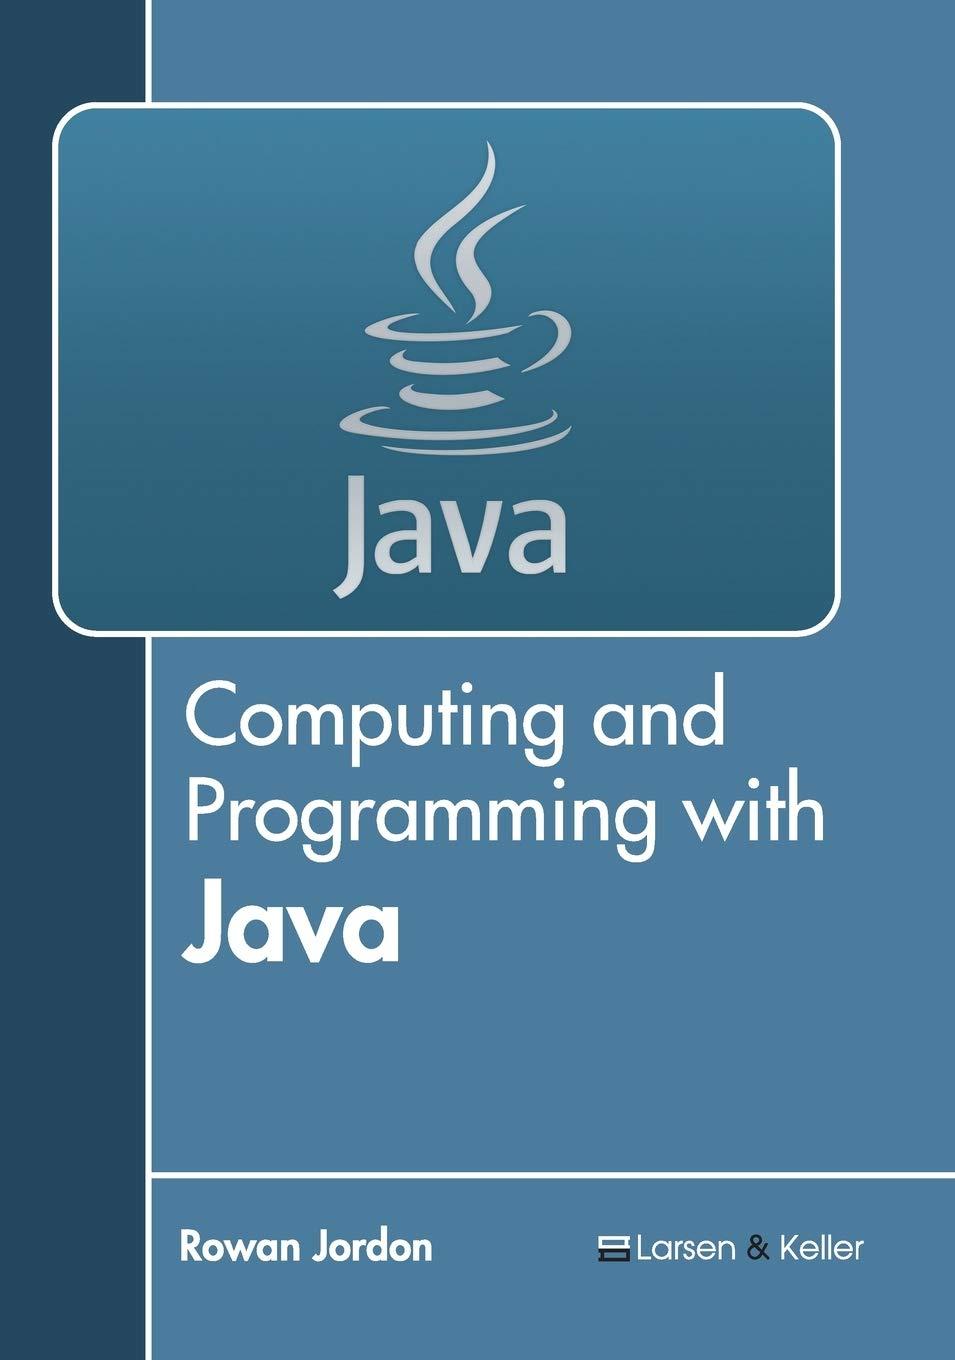 computing and programming with java 1st edition rowan jordon 1641721537, 978641721530